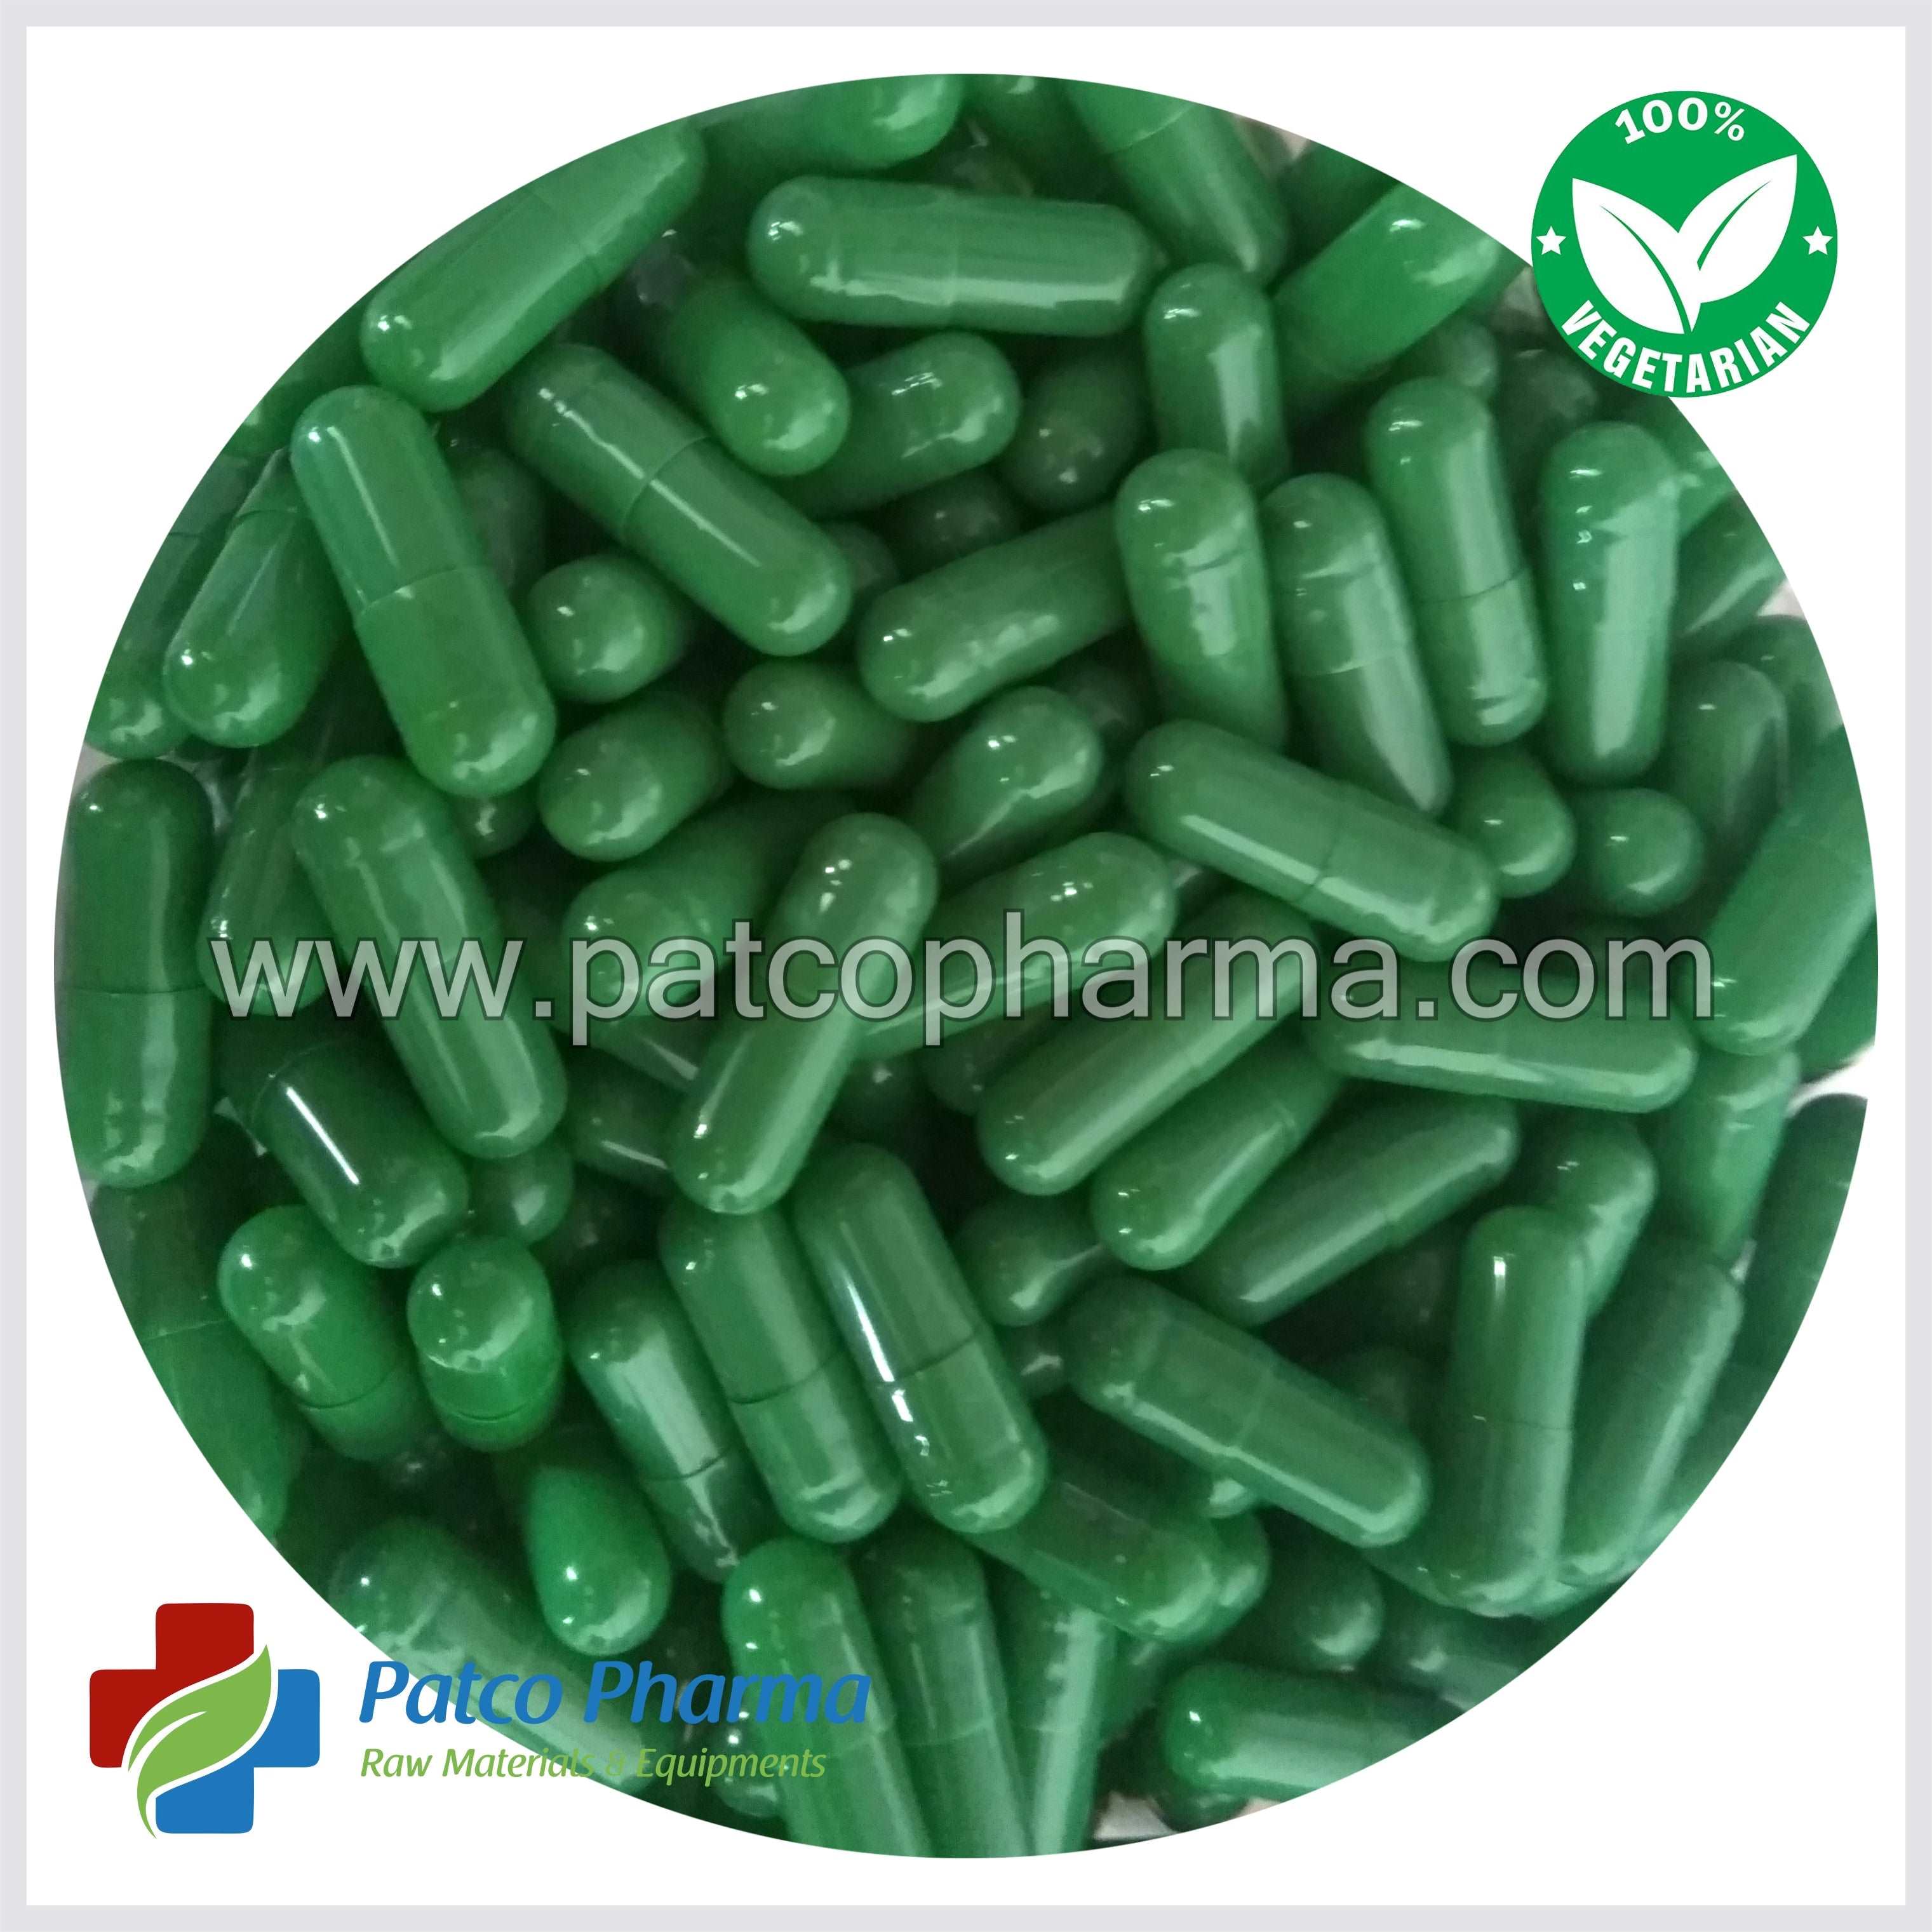 Size 0 Green Empty Vegatarian Capsule, Patco Pharma, HPMC capsules, size-0-green-empty-vegetarian-capsule, "500 mg capsule, Green Capsule", Size 0 Capsule, Vegetarian capsule, Patco Pharma